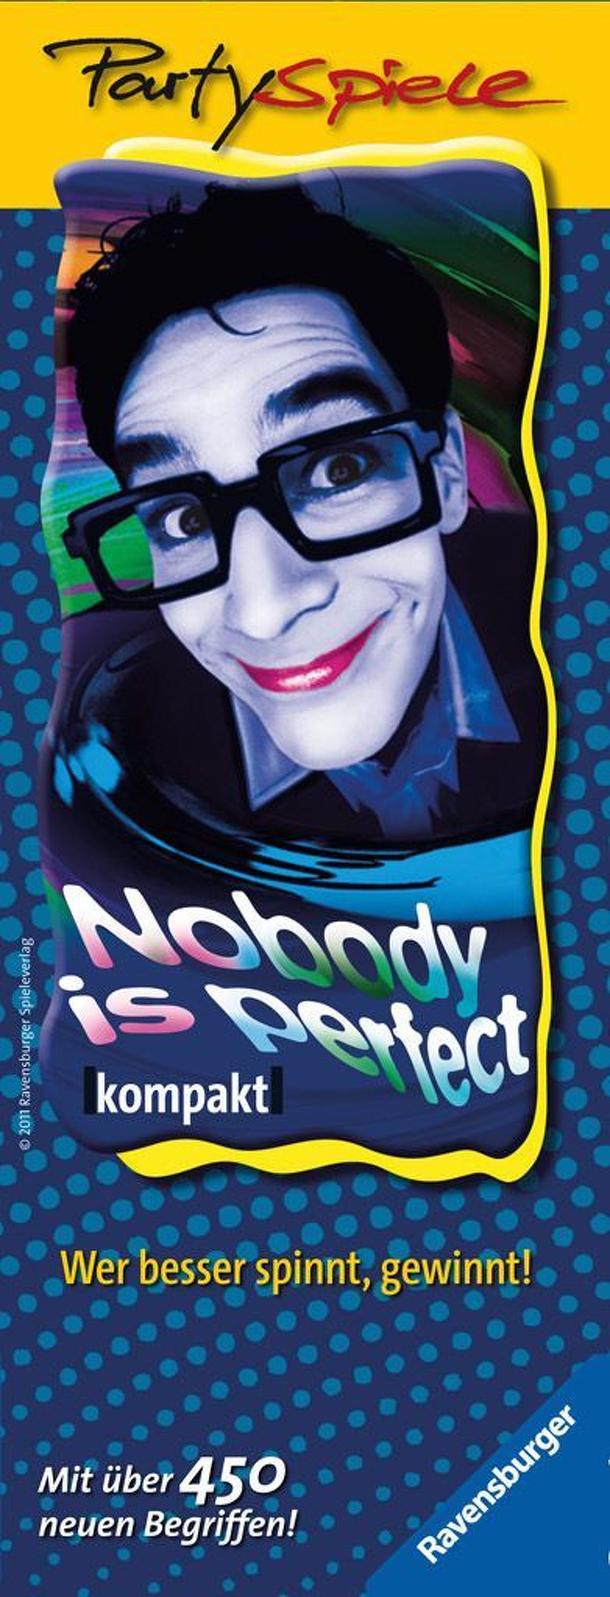 Nobody Is Perfect: Kompakt